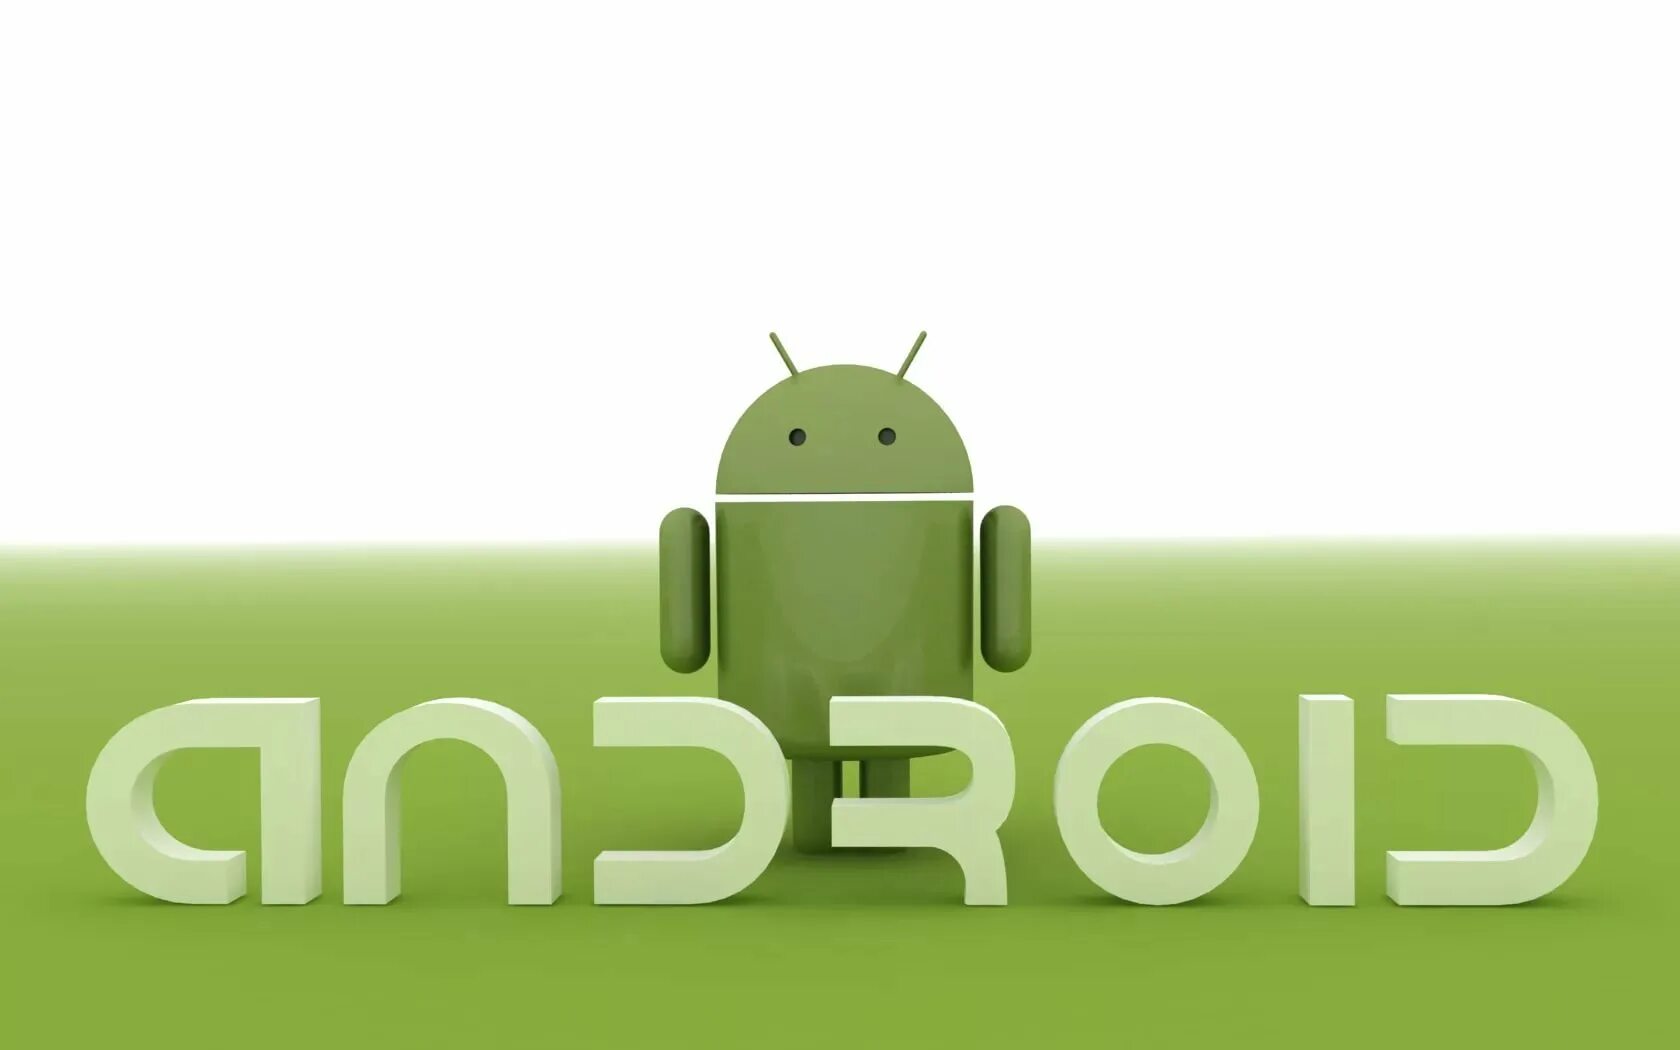 Логотип андроид. Андро. Картинки на андроид. Операционная система андроид. Популярный сайт андроид